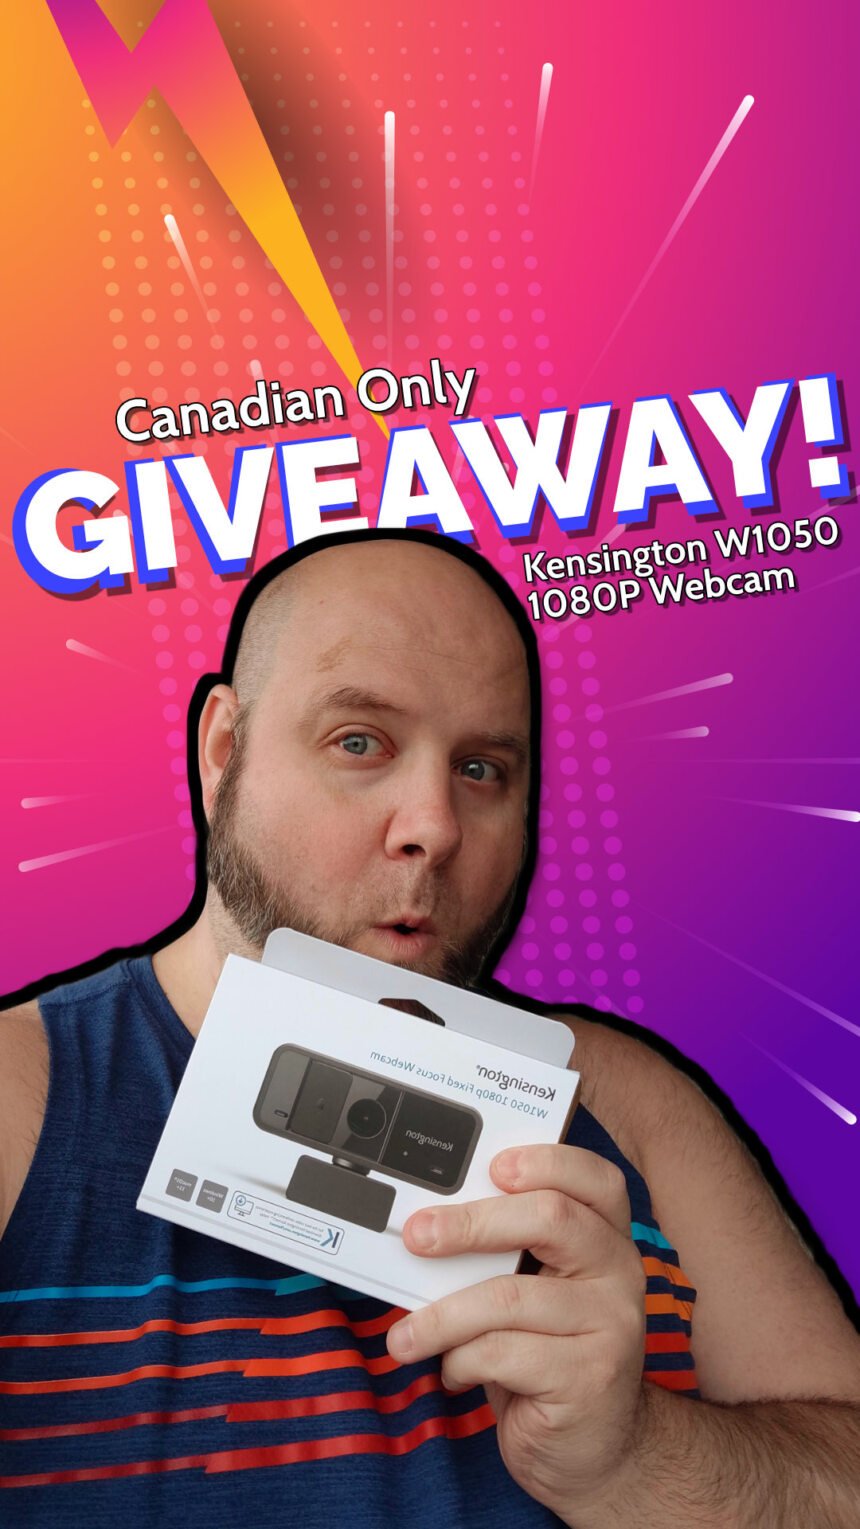 Canadian Giveaway Kensington W1050 1080P Webcam